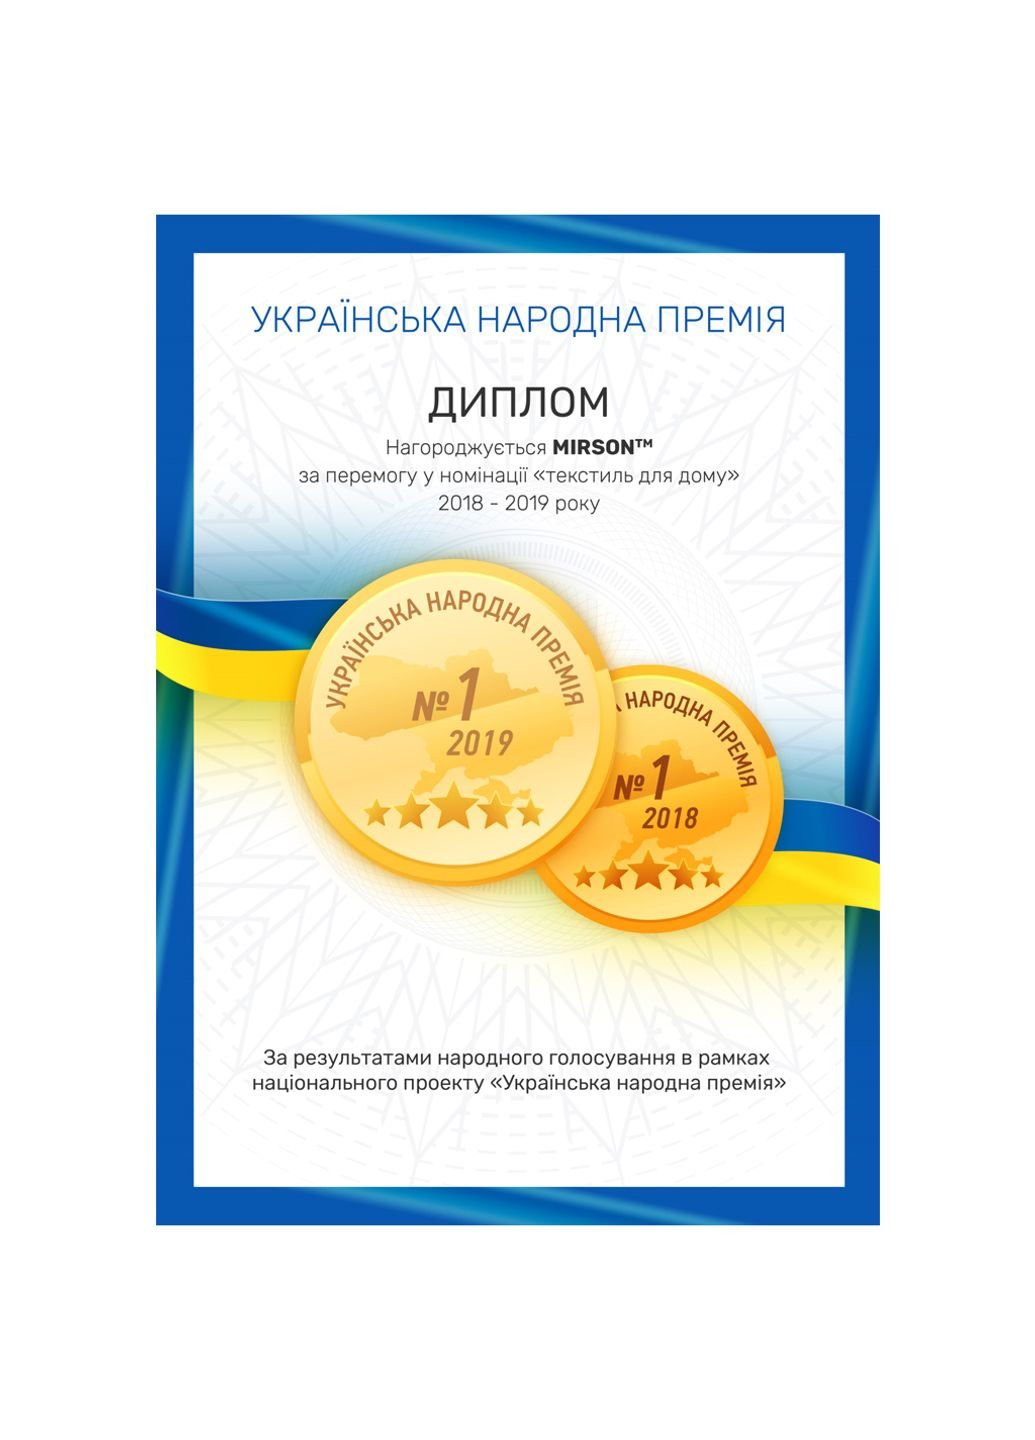 Mirson полотенце набор банный №5010 softness peach 50x90, 70x140, 100x150 (2200003182705) персиковый производство - Украина